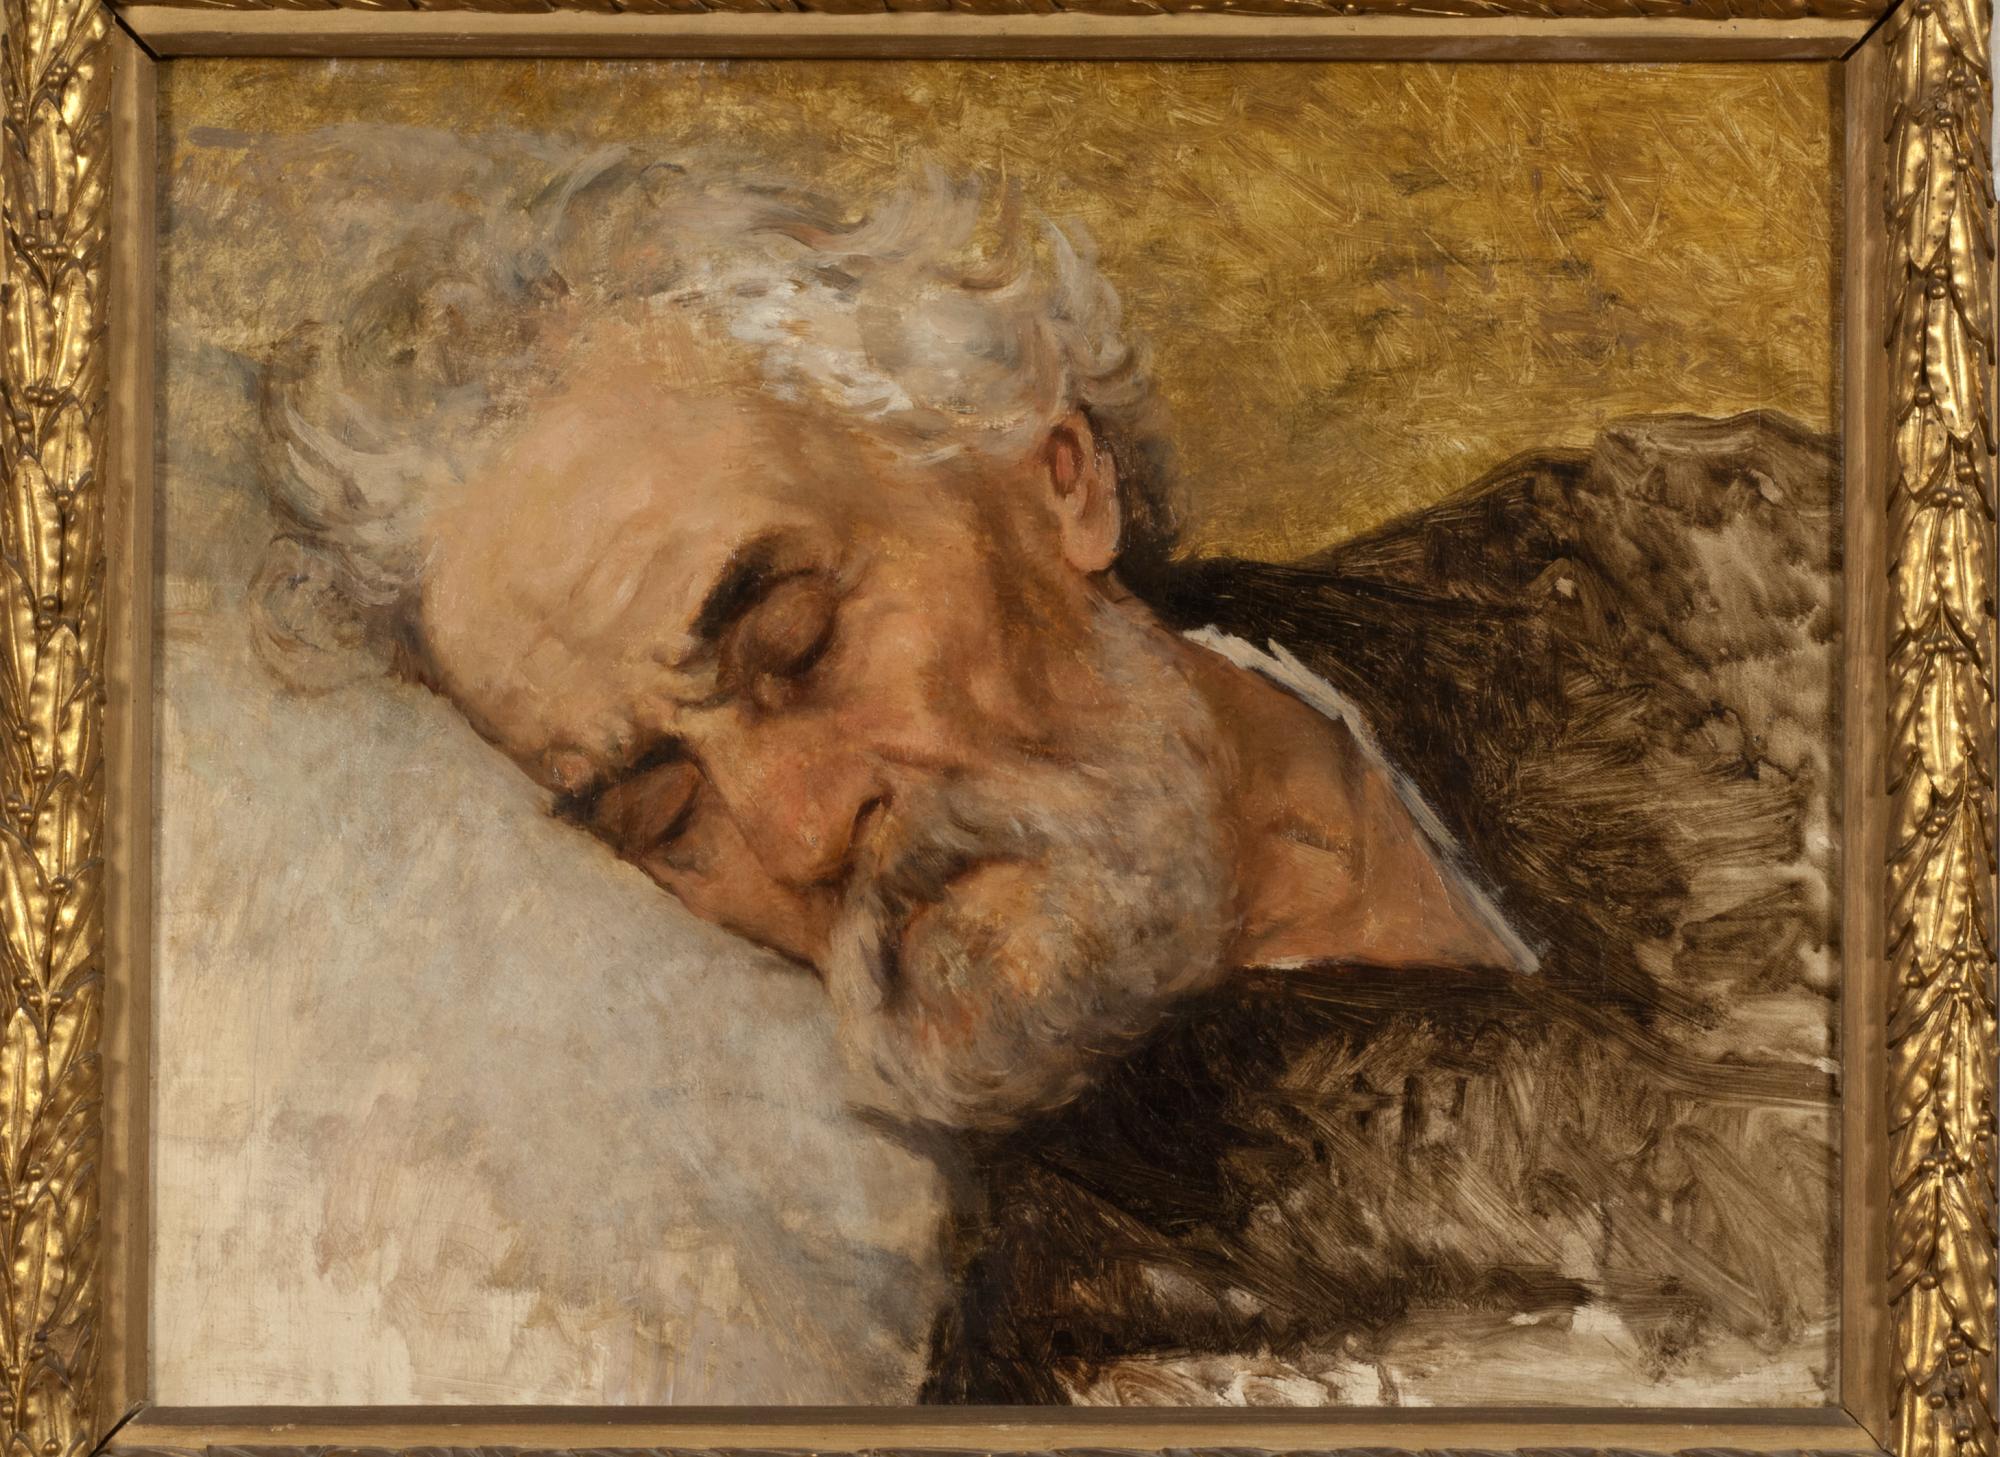 Silvestro Lega    
Study of Head for The Dying Mazzini
c. 1873        
Oil on panel    
Modigliana, Pinacoteca Comunale “Silvestro Lega”
Pinacoteca Comunale 